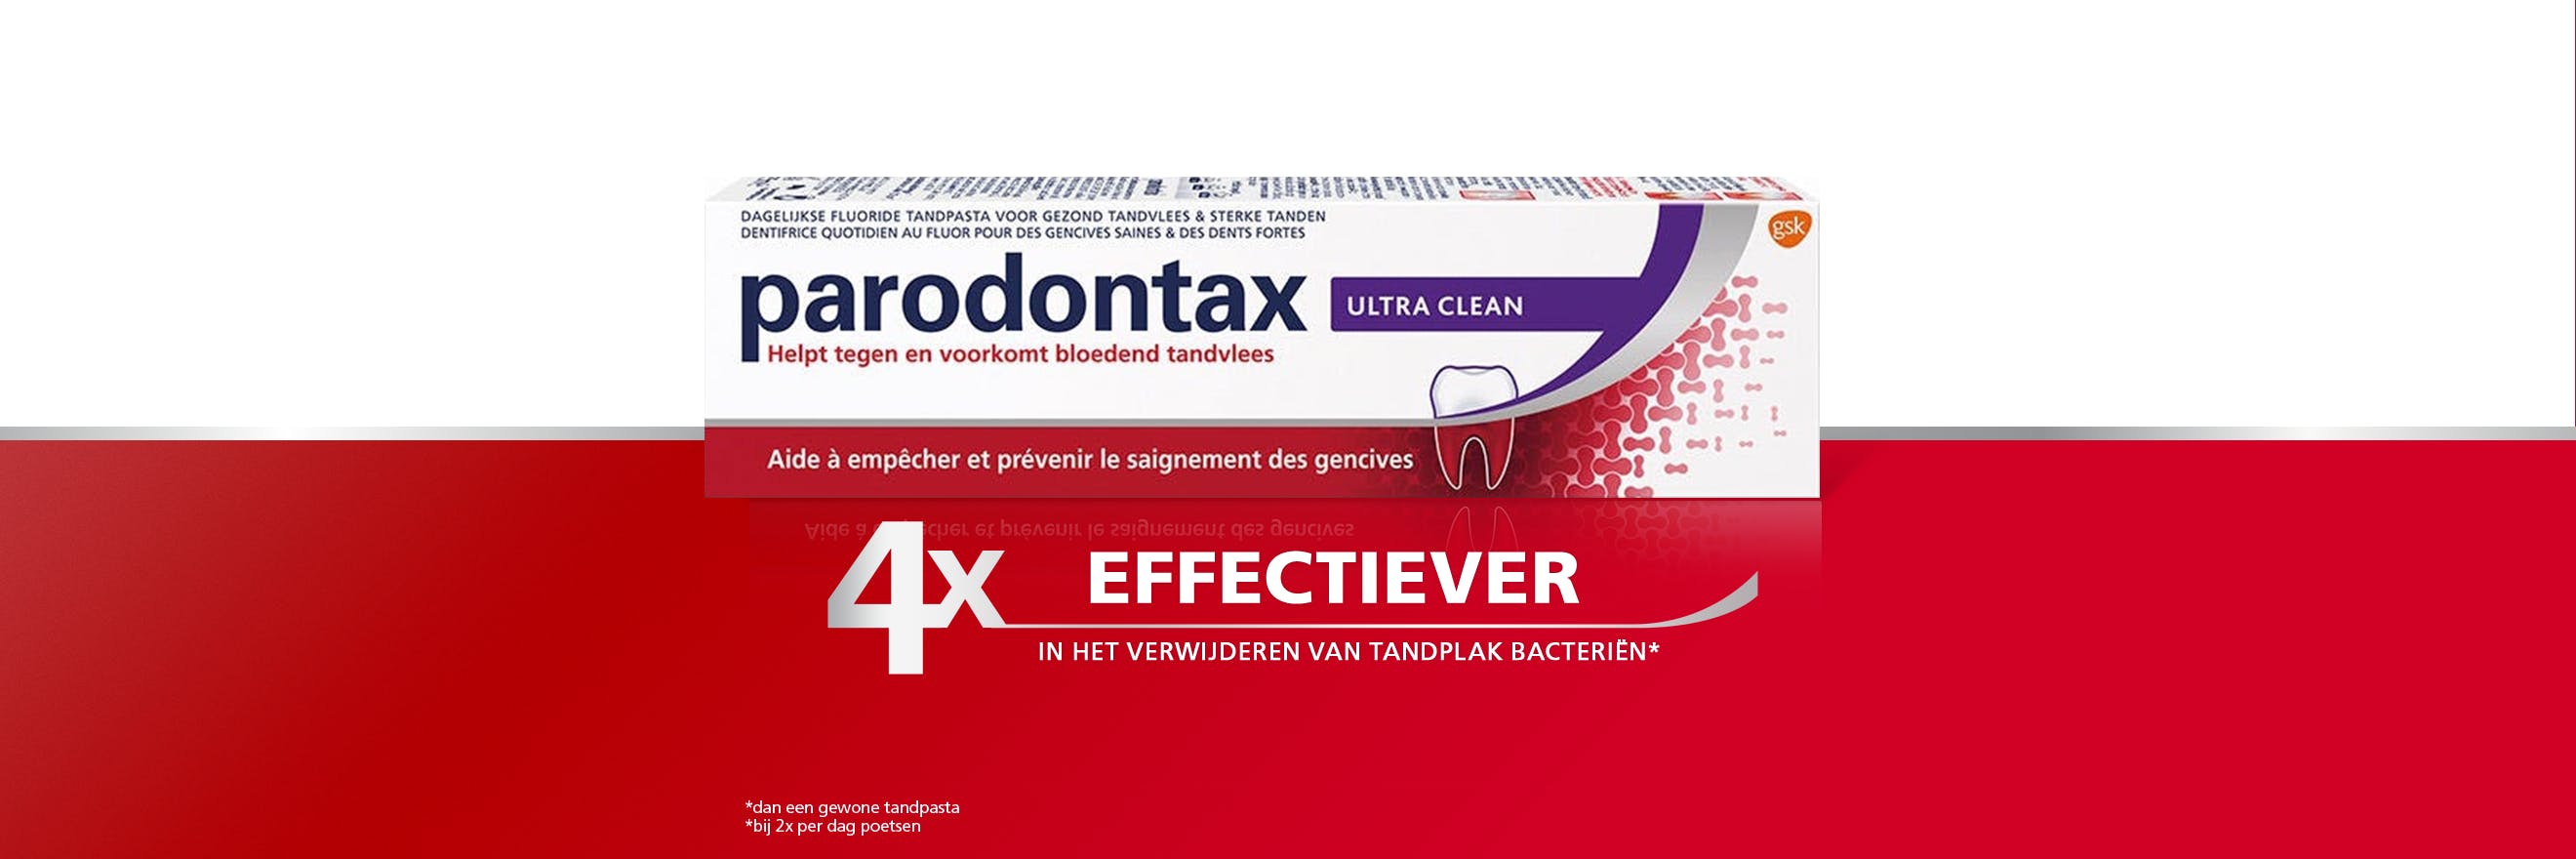 Nieuwe parodontax Ultra Clean tandpasta